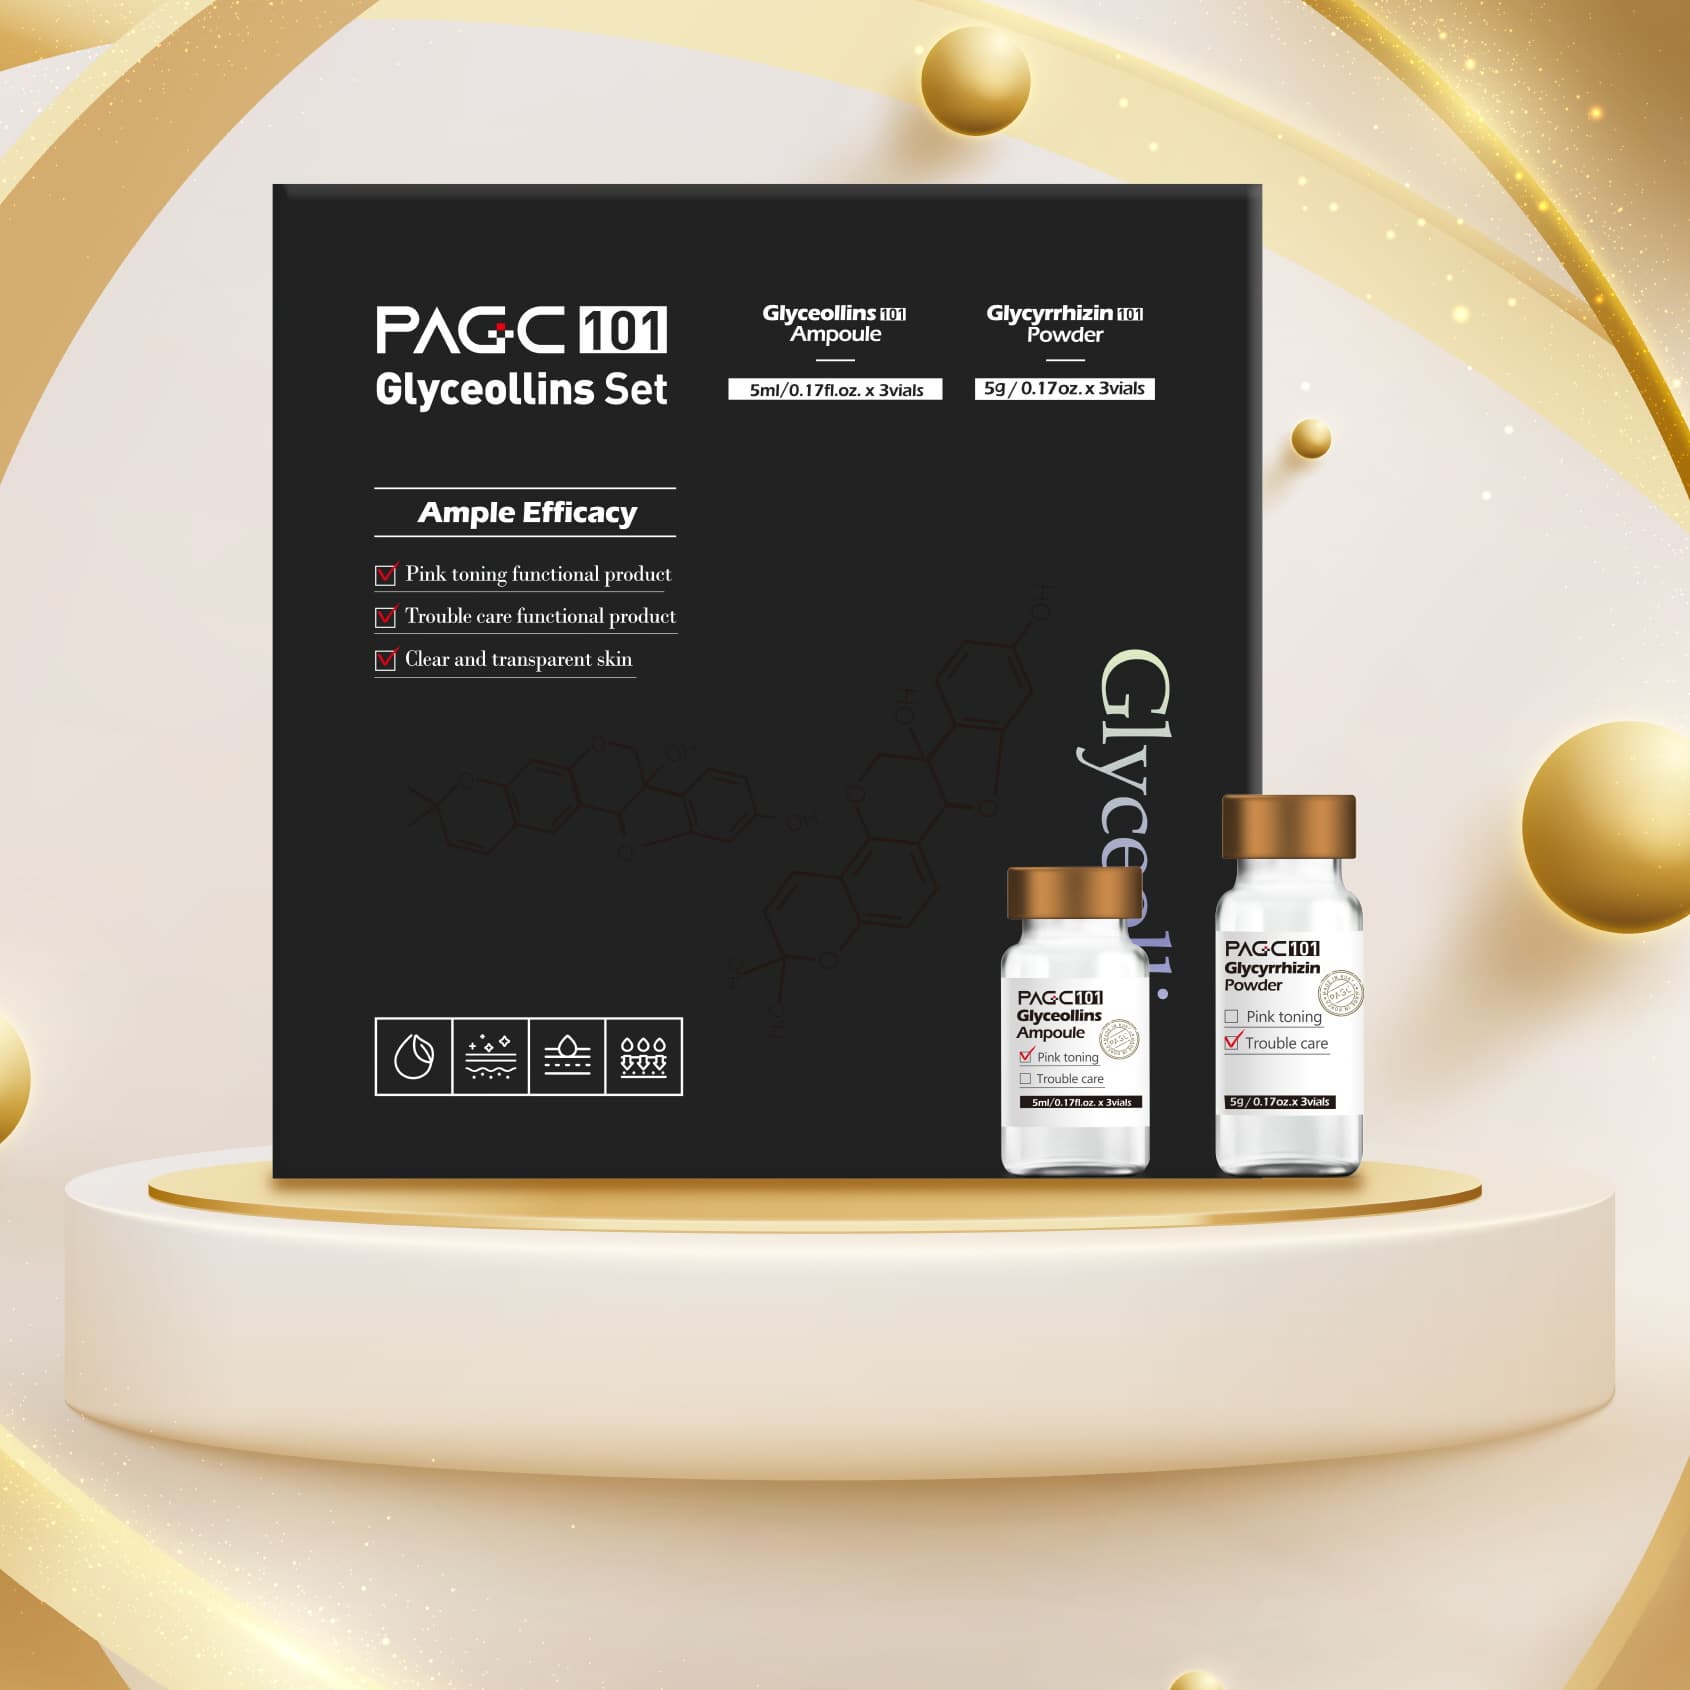 PAGC 101 Glyceollins